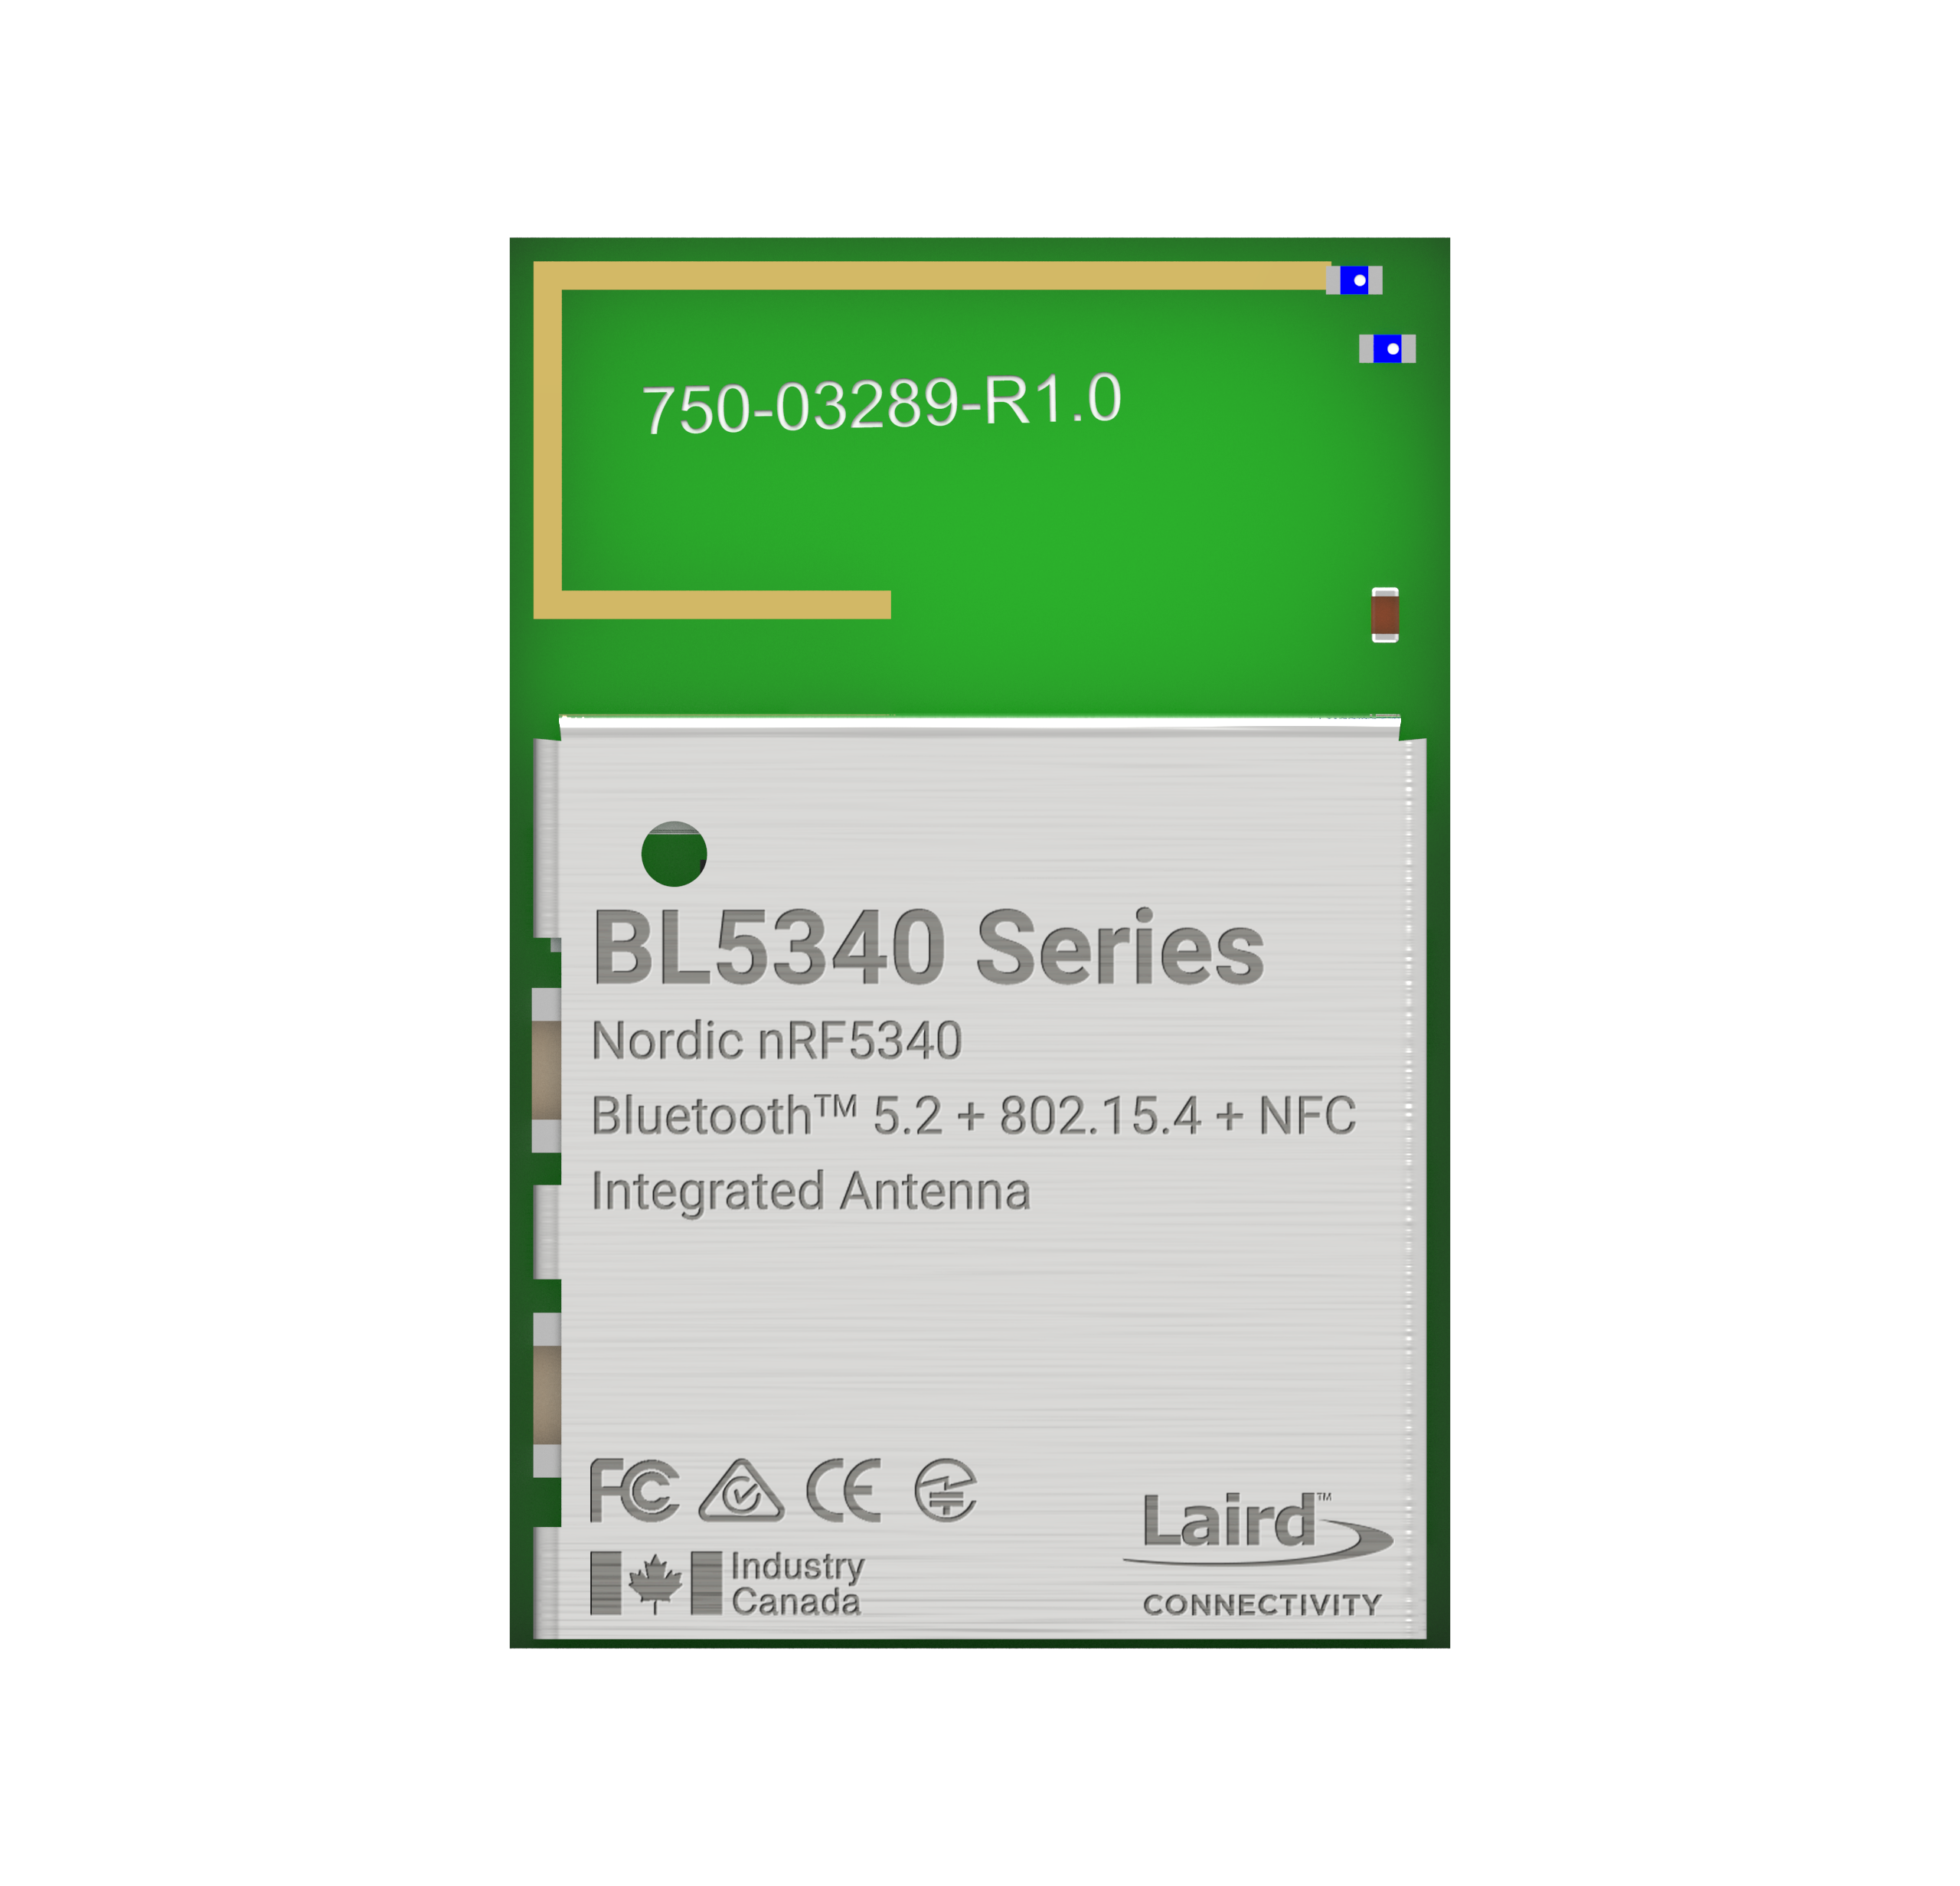 BL5340 Series - Multi-Core Bluetooth 5.2 + 802.15.4 + NFC Modules